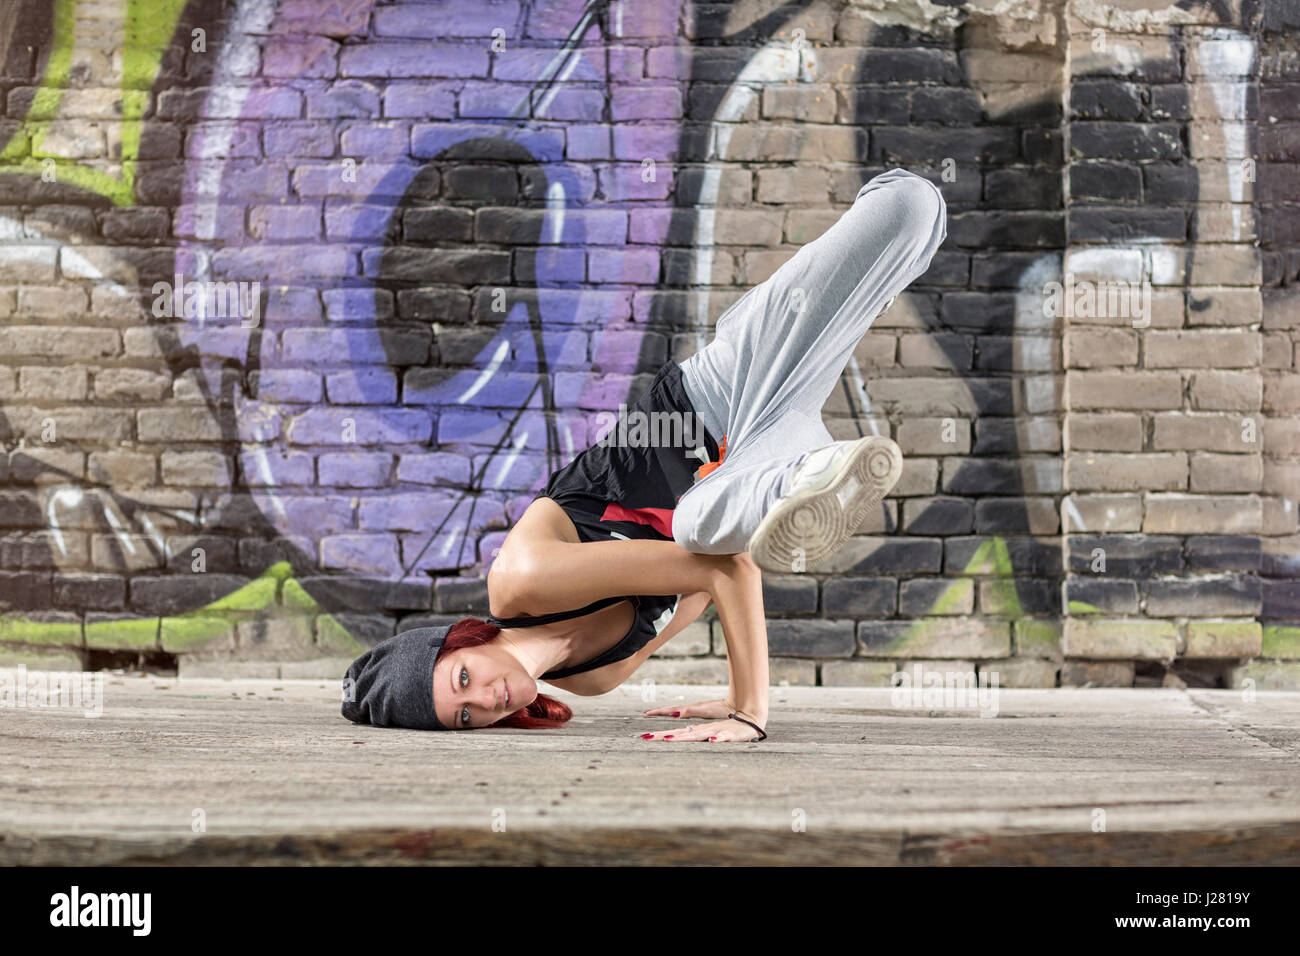 Nice flexible girl perform street dance Stock Photo